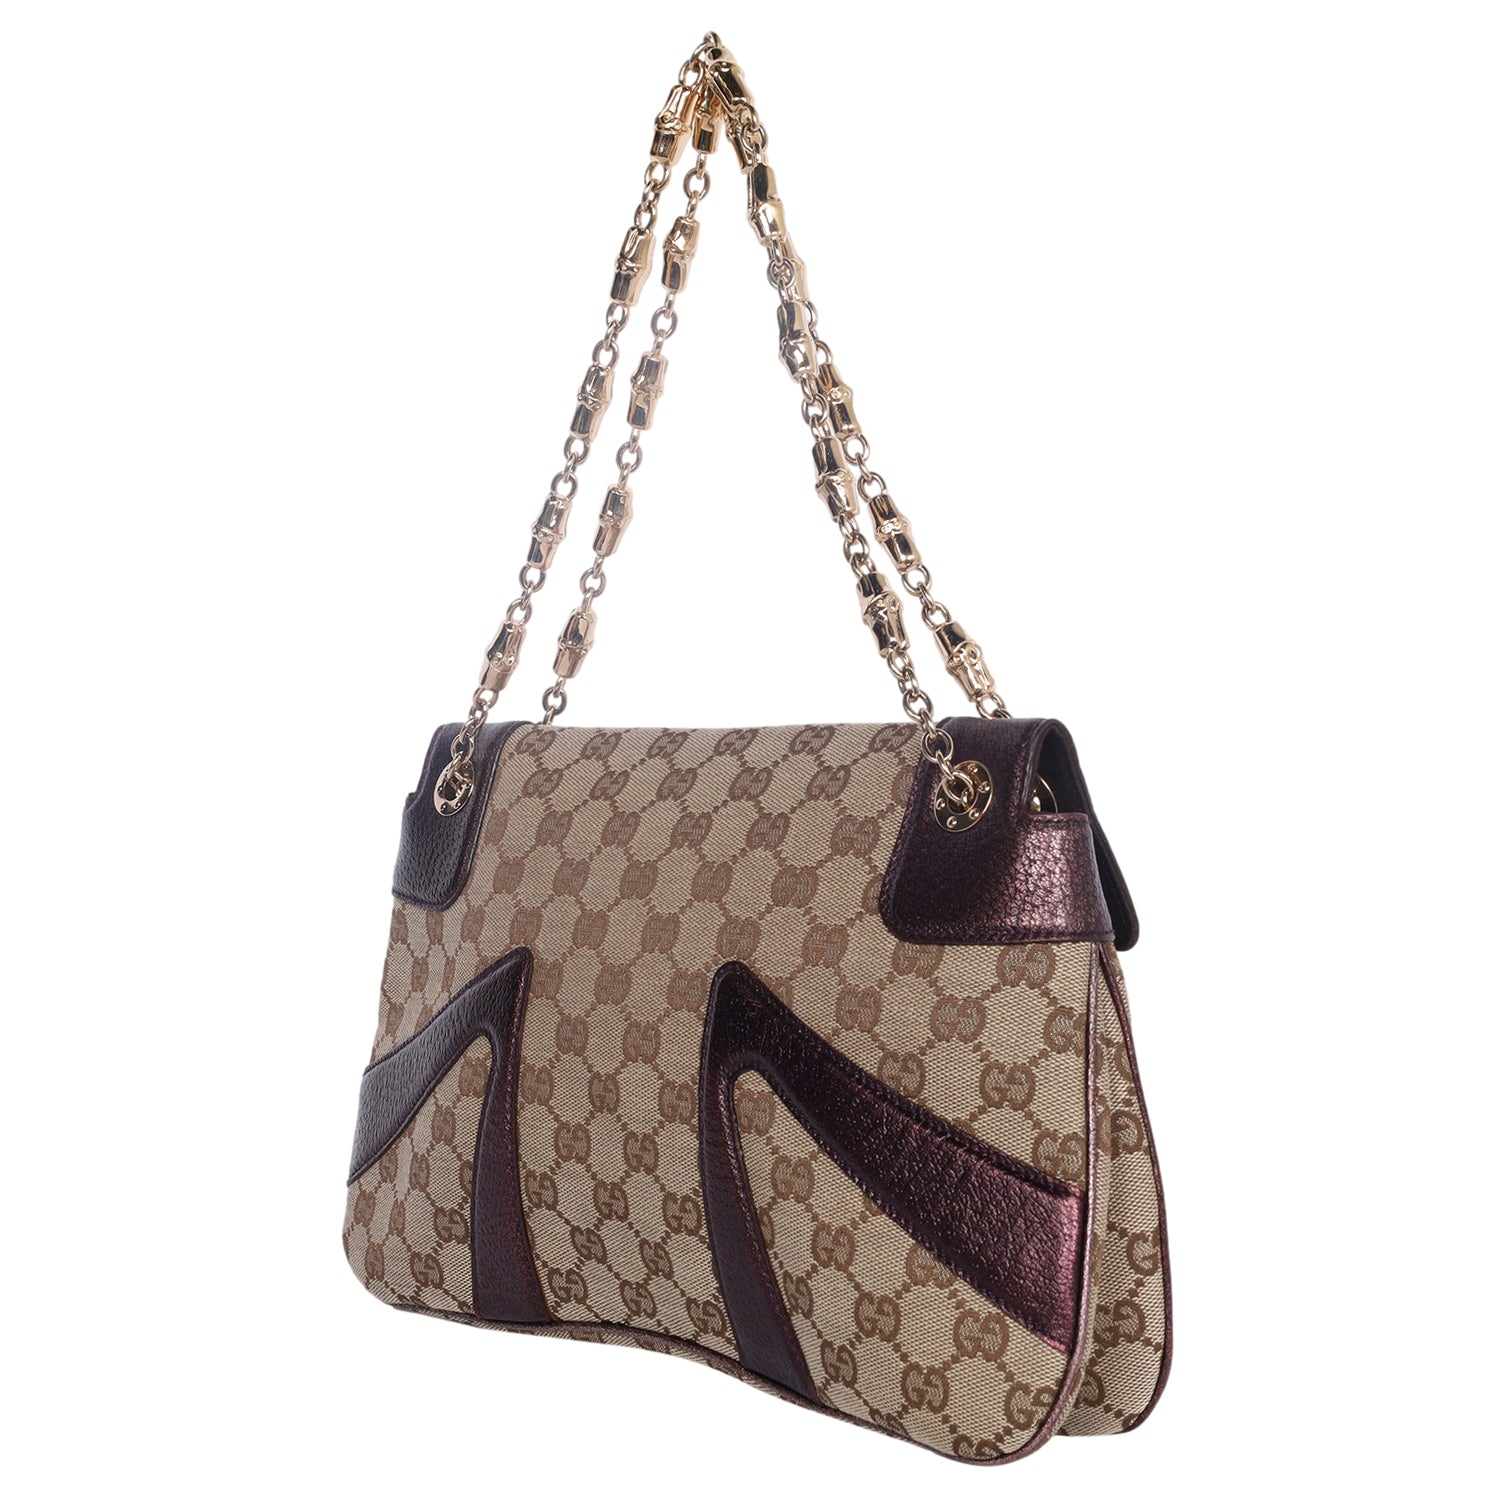 Gucci by Tom Ford ladies bag